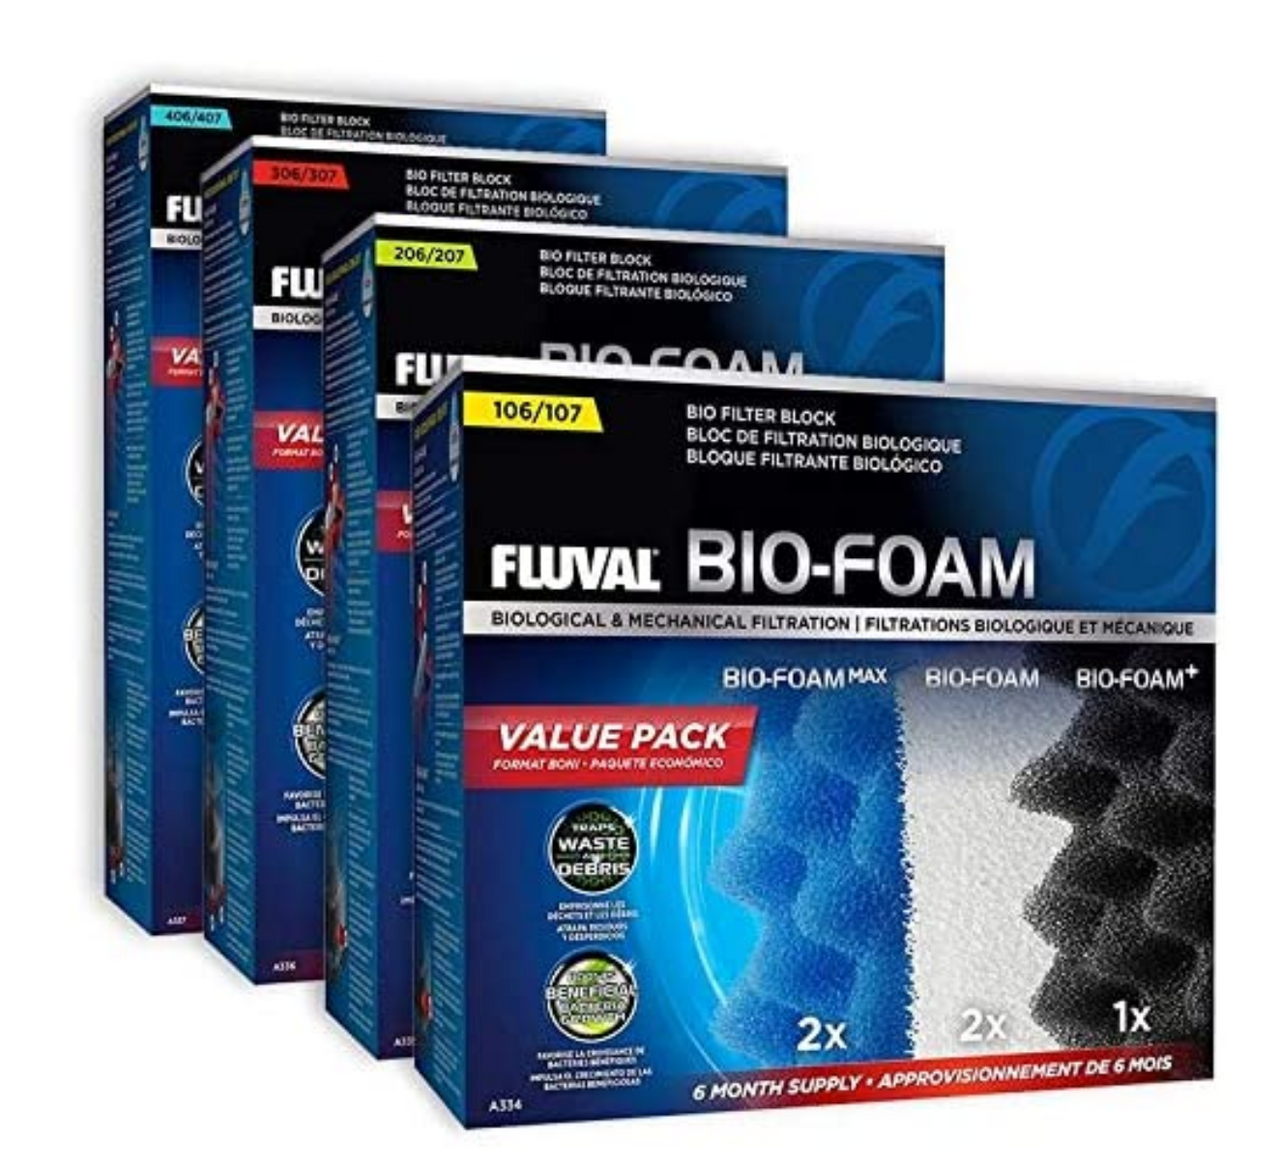 Fluval 406/407 6 Month Bio Foam Value Pack - A337